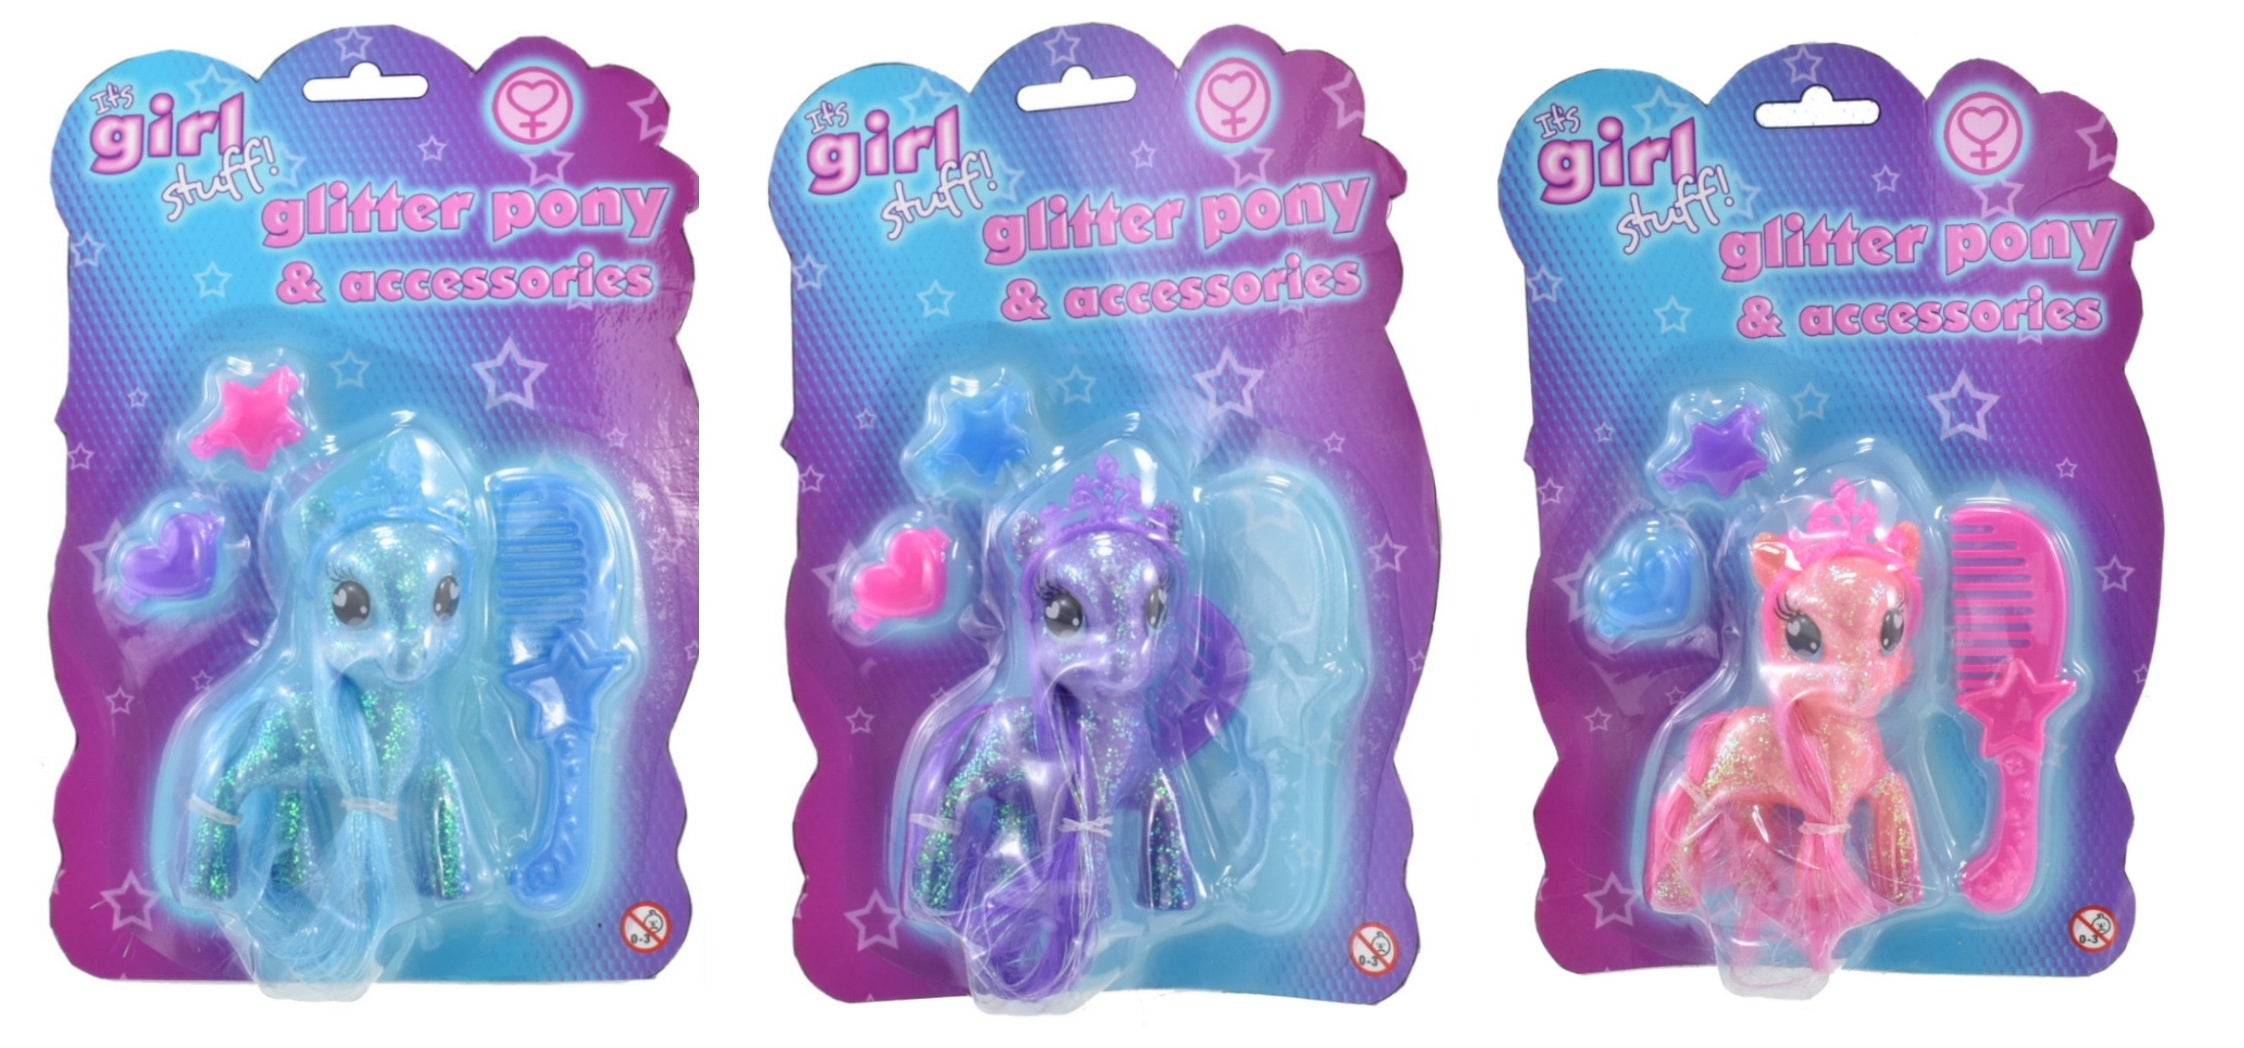 Glitter Pony Figurine and Accessories